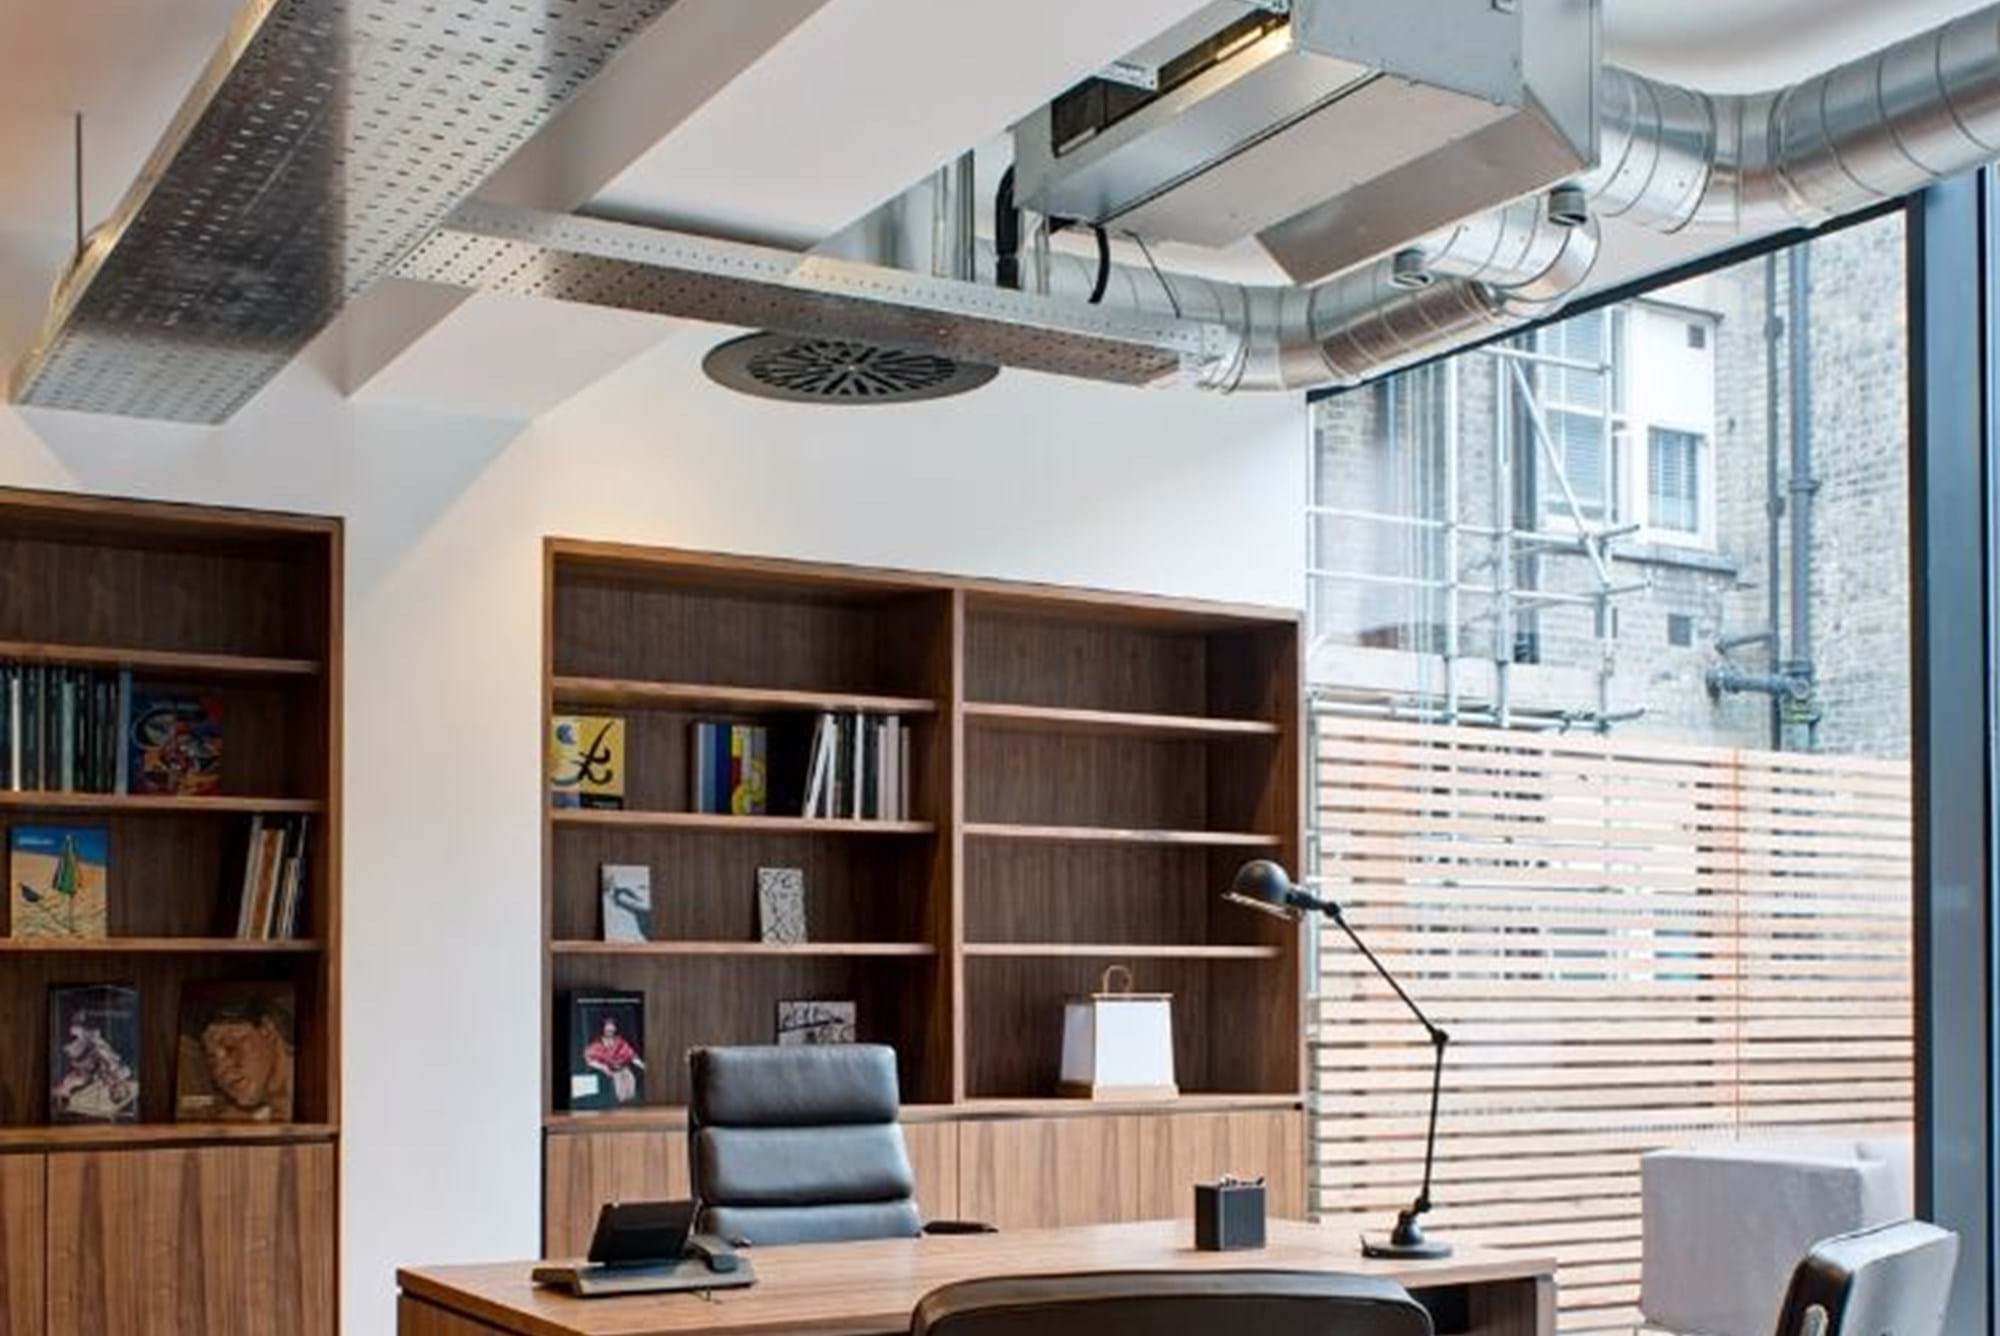 Modus Workspace office design, fit out and refurbishment - Craigewan - Graigewan 08 highres sRGB.jpg